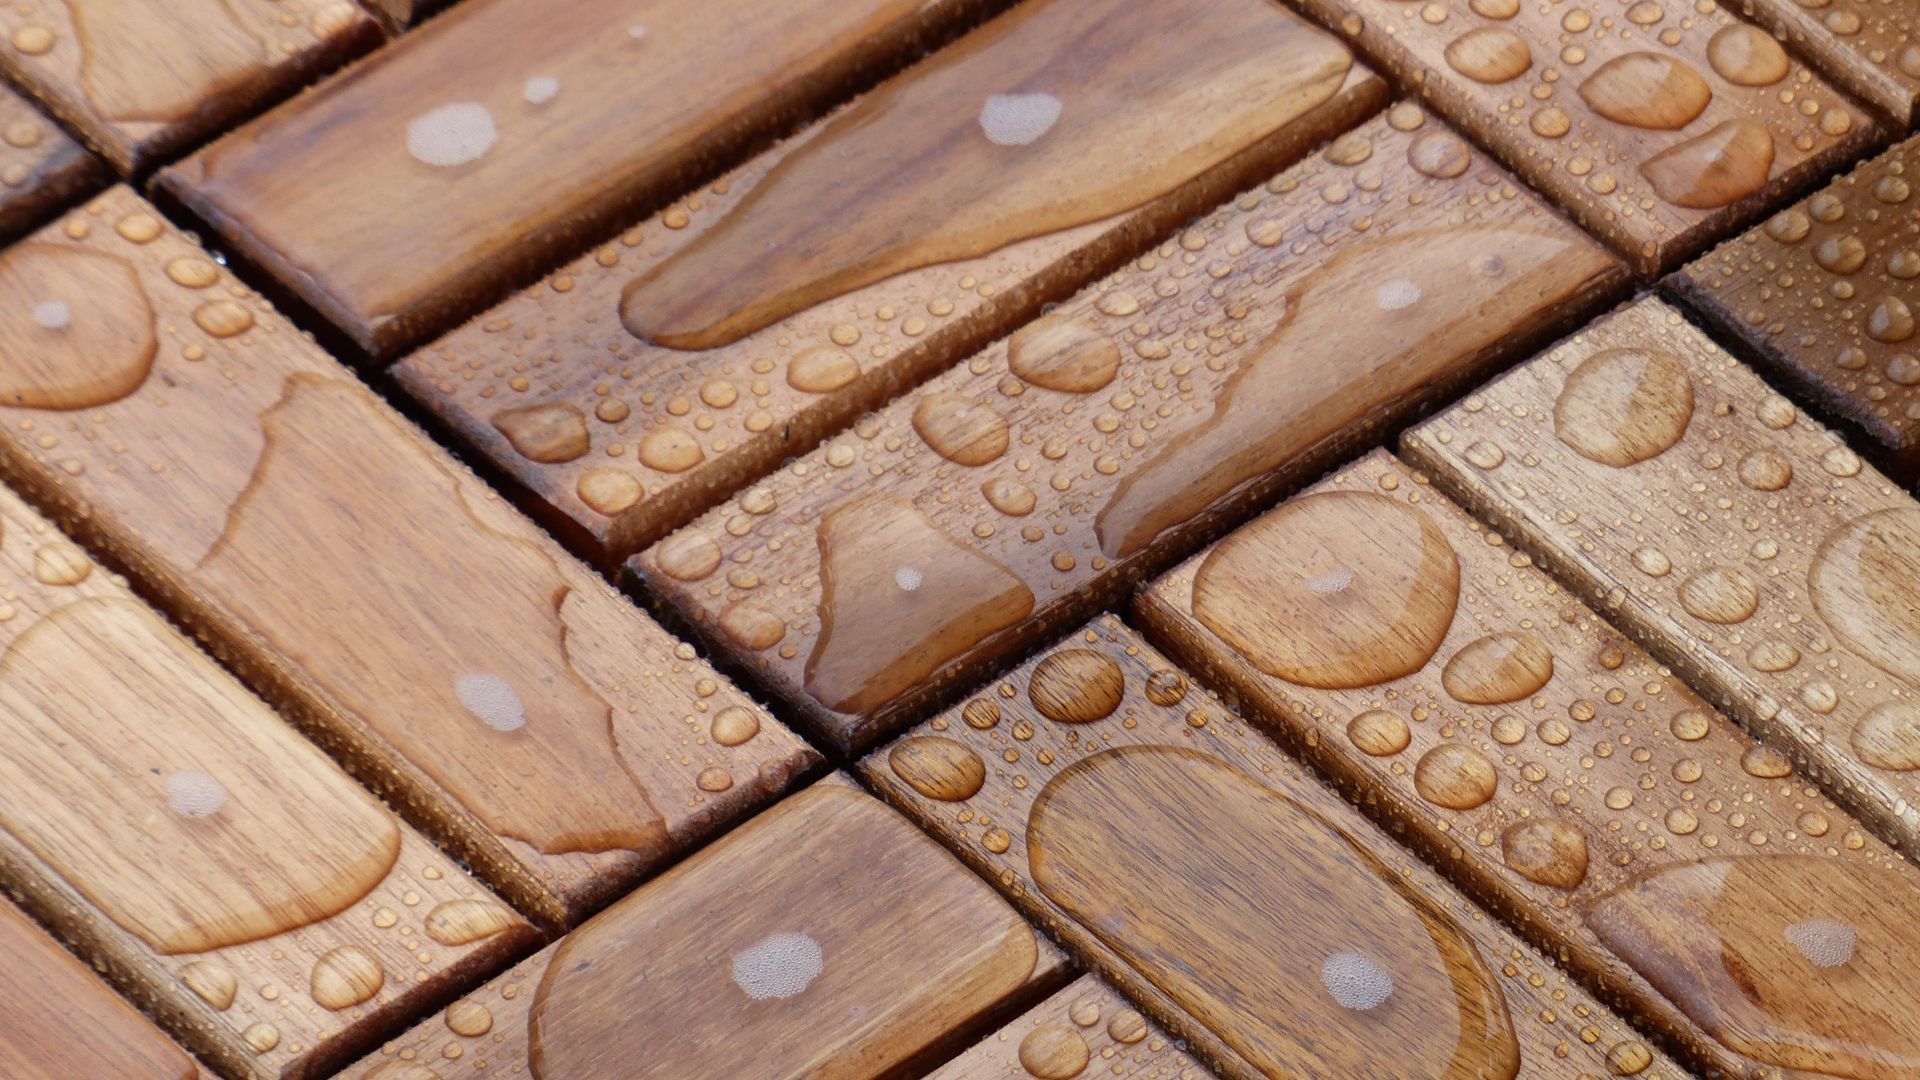 Wallpaper Water, water drops on wooden surface, pattern